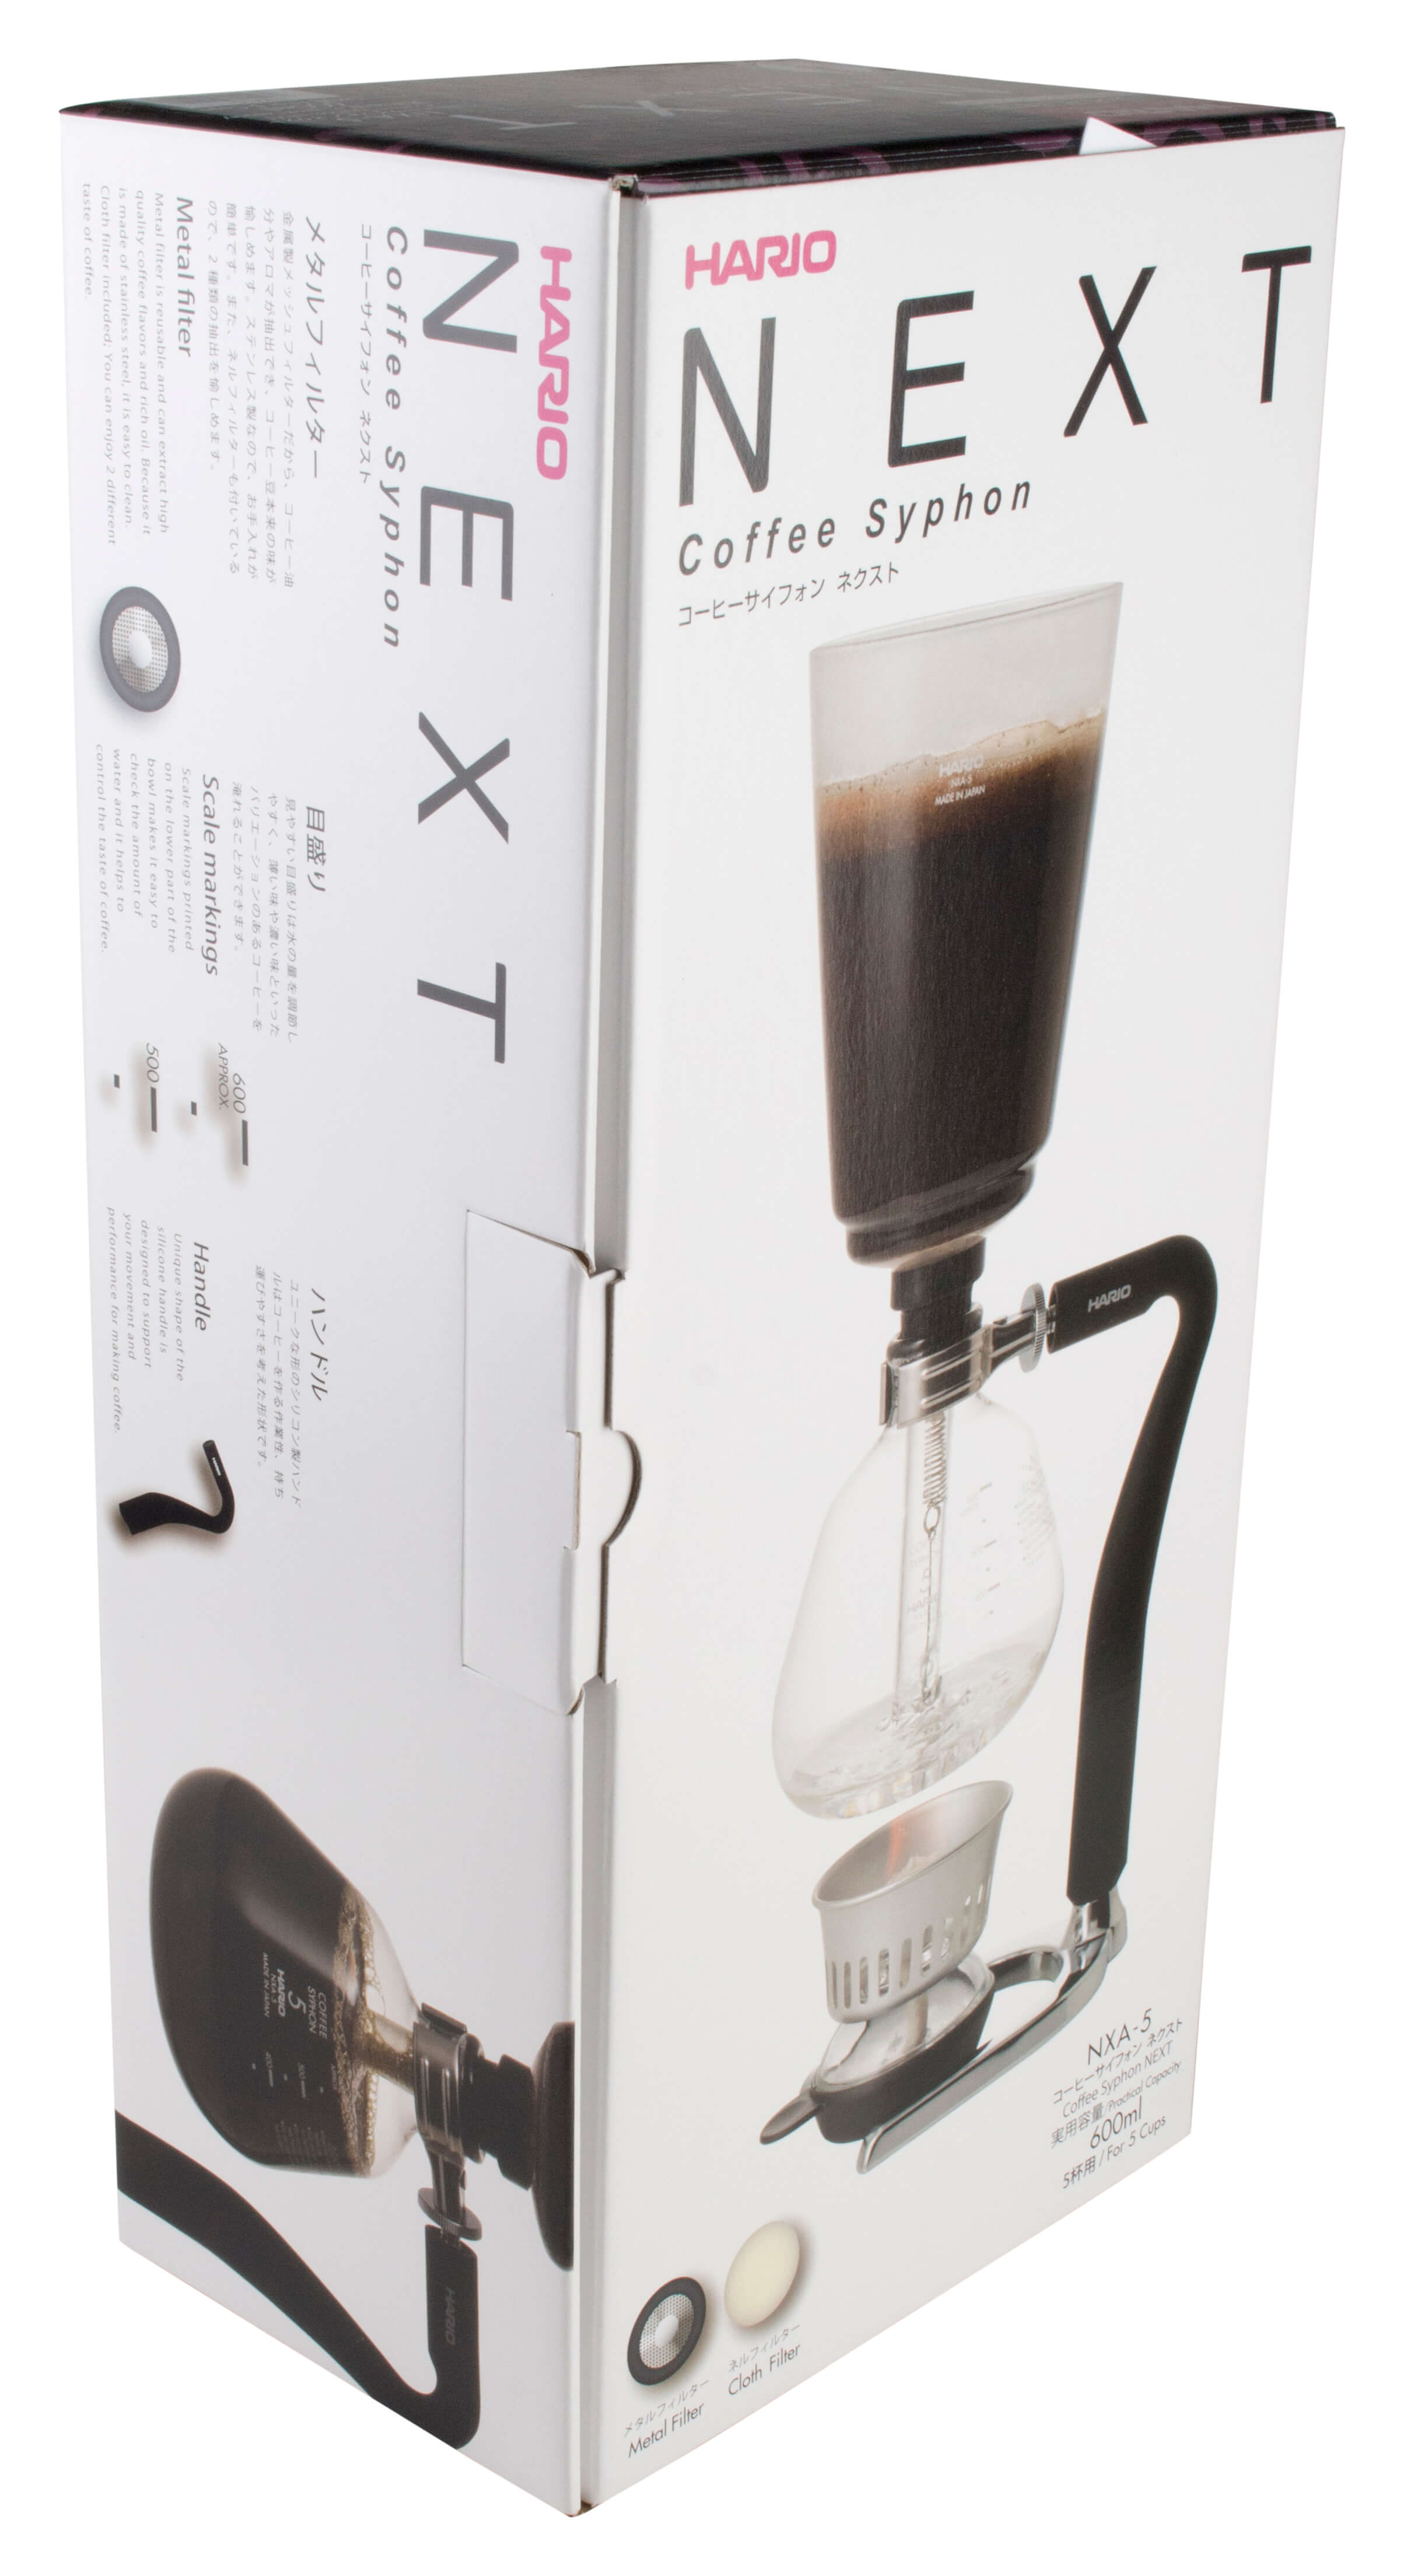 Coffee Syphon Next, Hario - 5 cups, 600ml